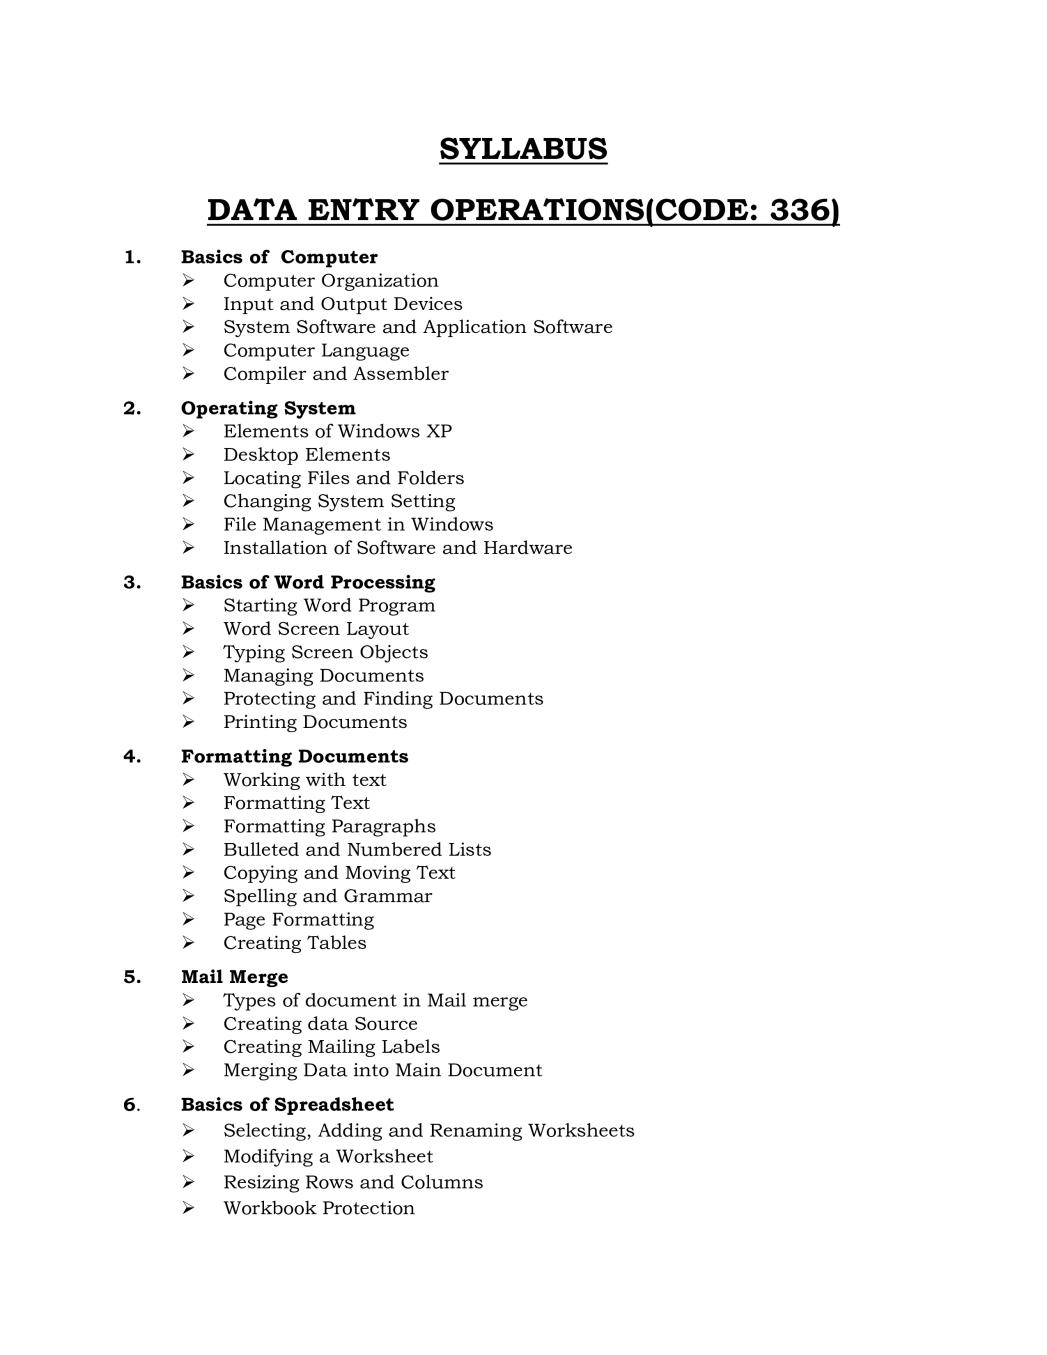 NIOS Class 12 Syllabus - Data Entry Operations - Page 1